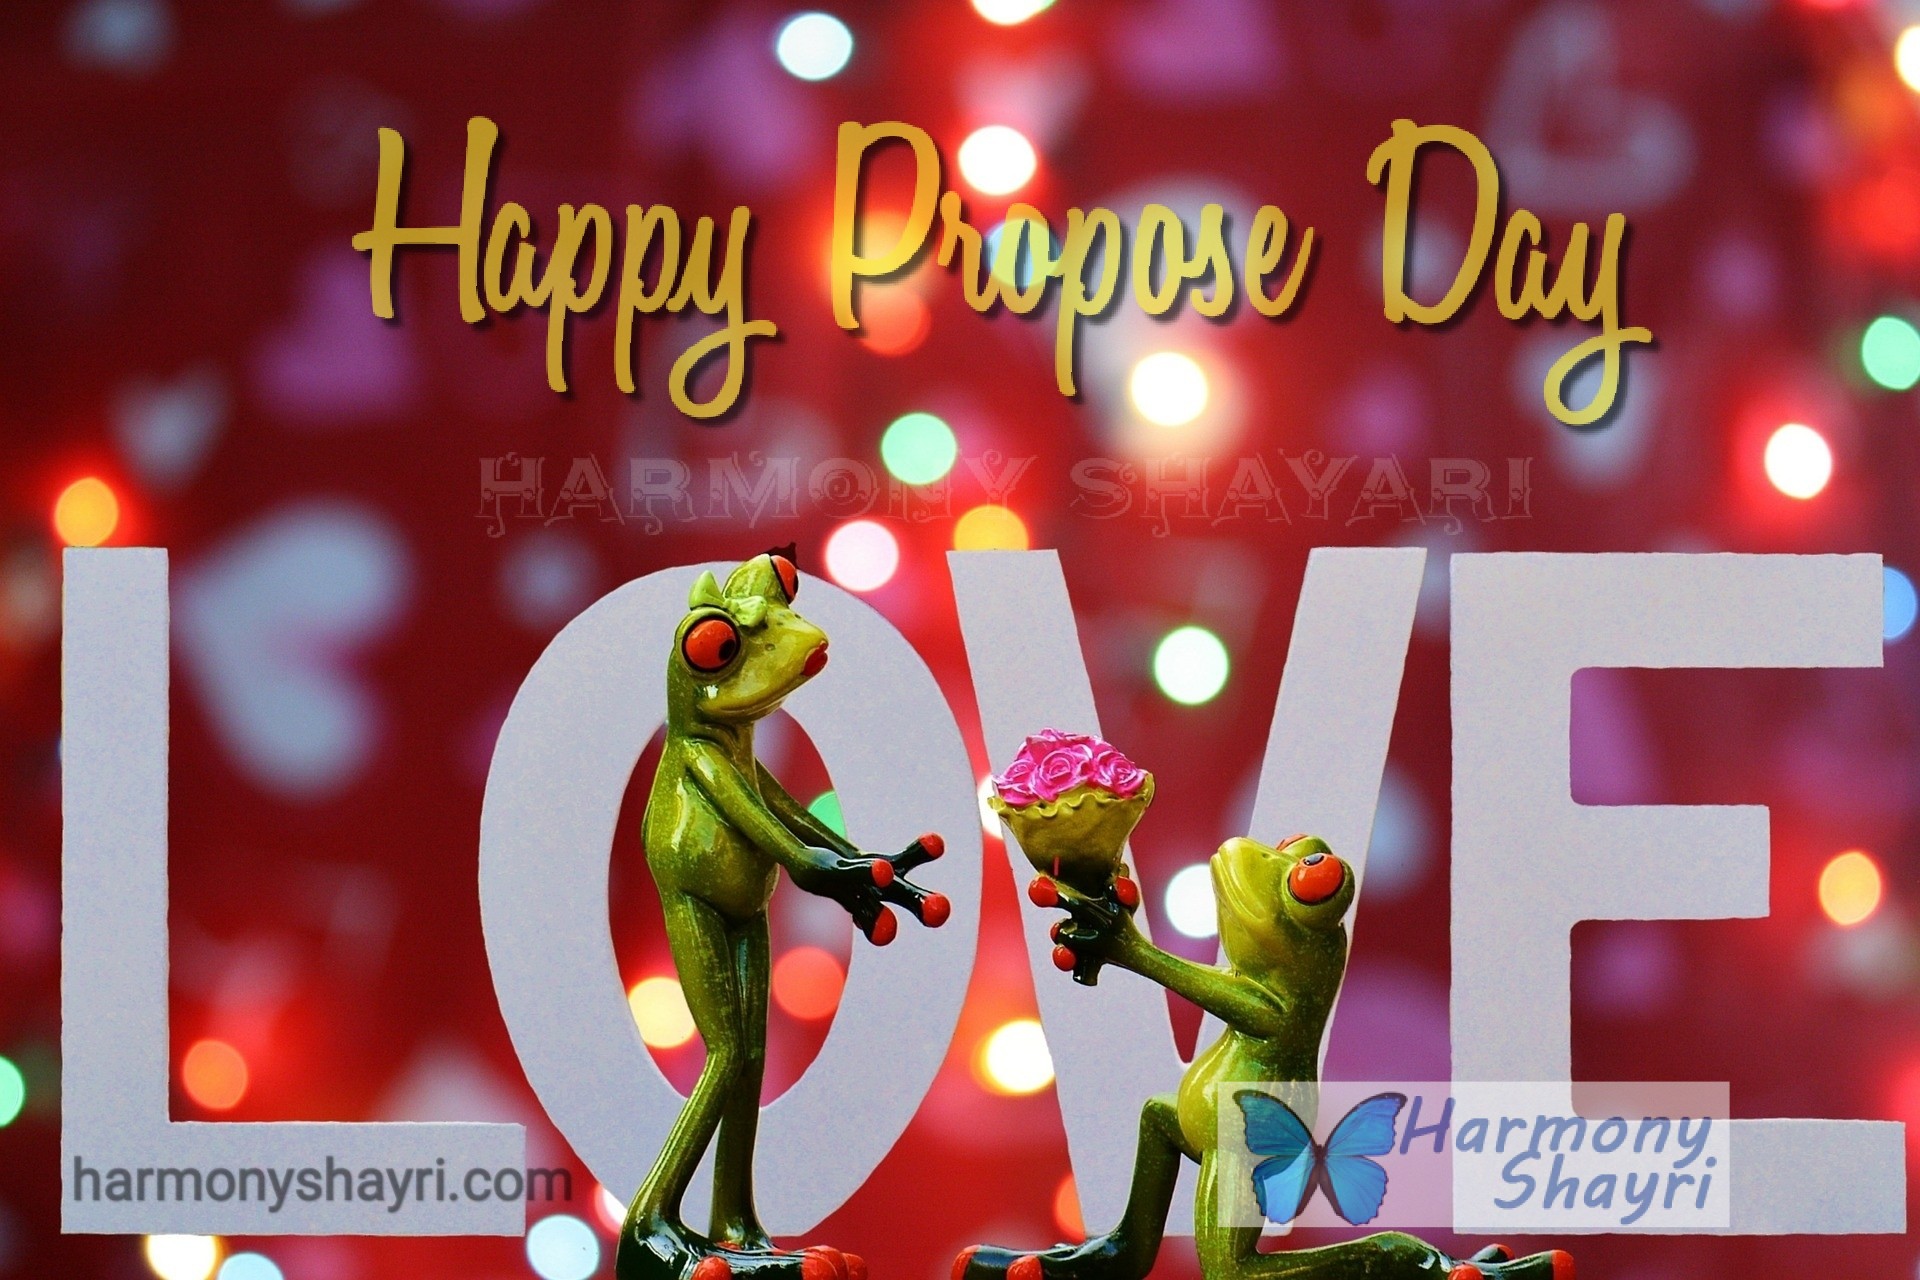 Happy Propose Day – harmonyshayri.com